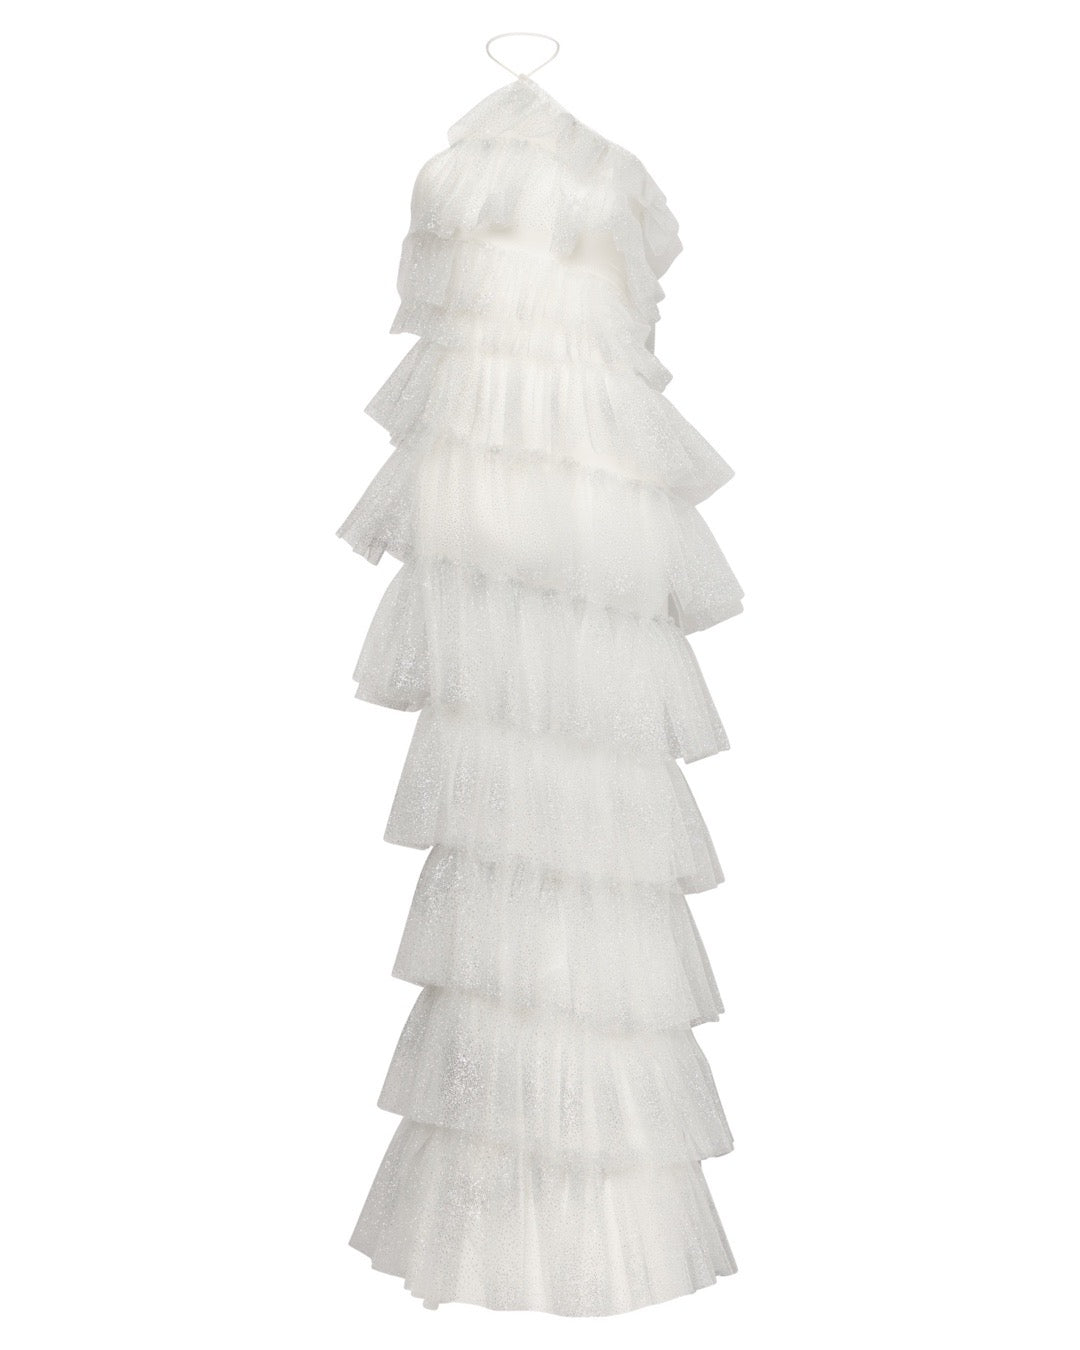 Henri Gown in Sparkle Blanc